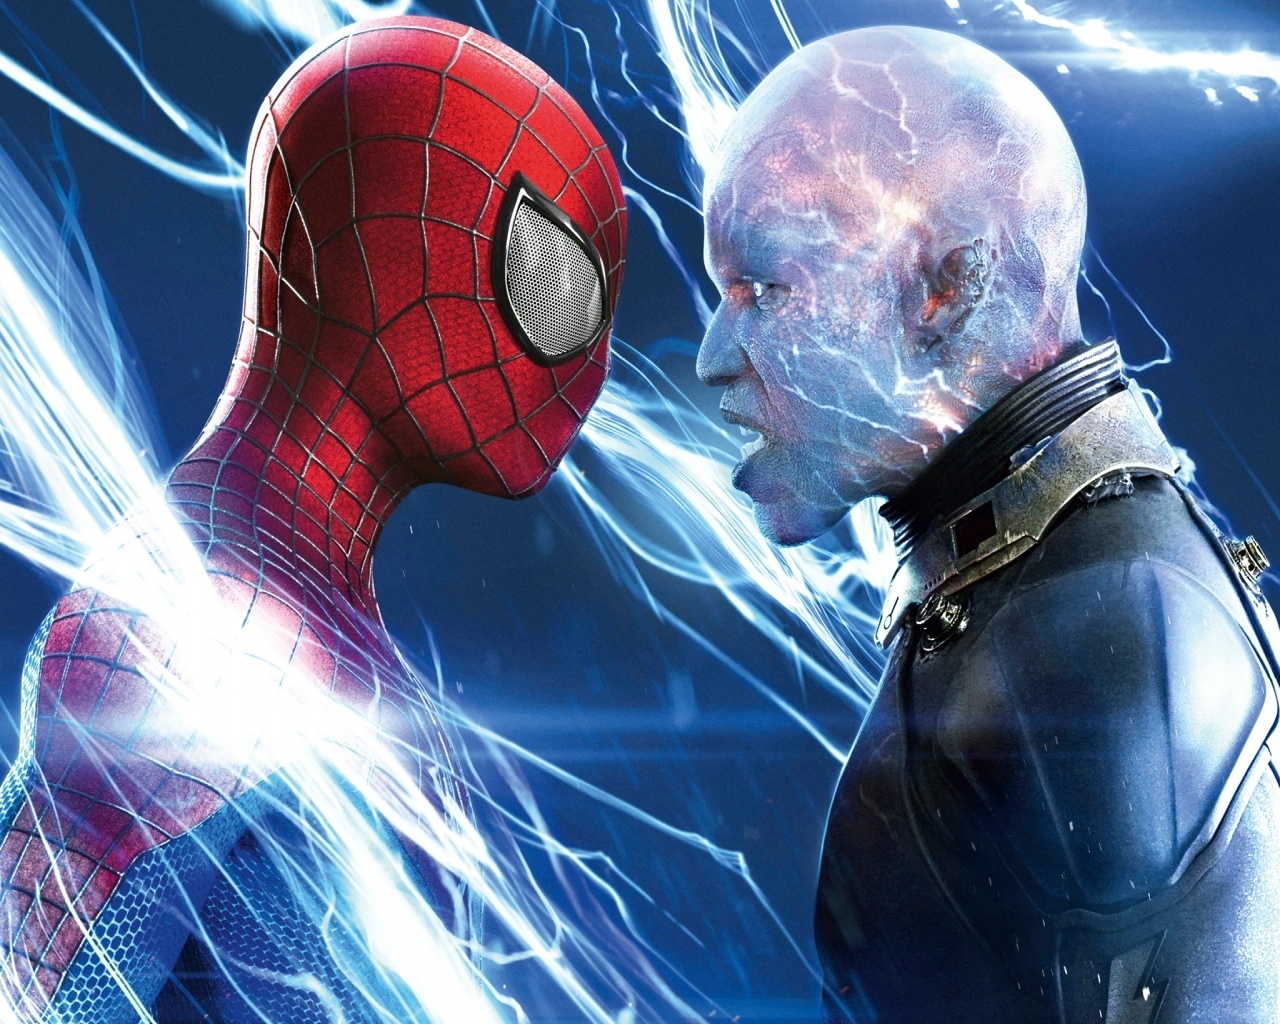 Spiderman vs Electro for 1280 x 1024 resolution